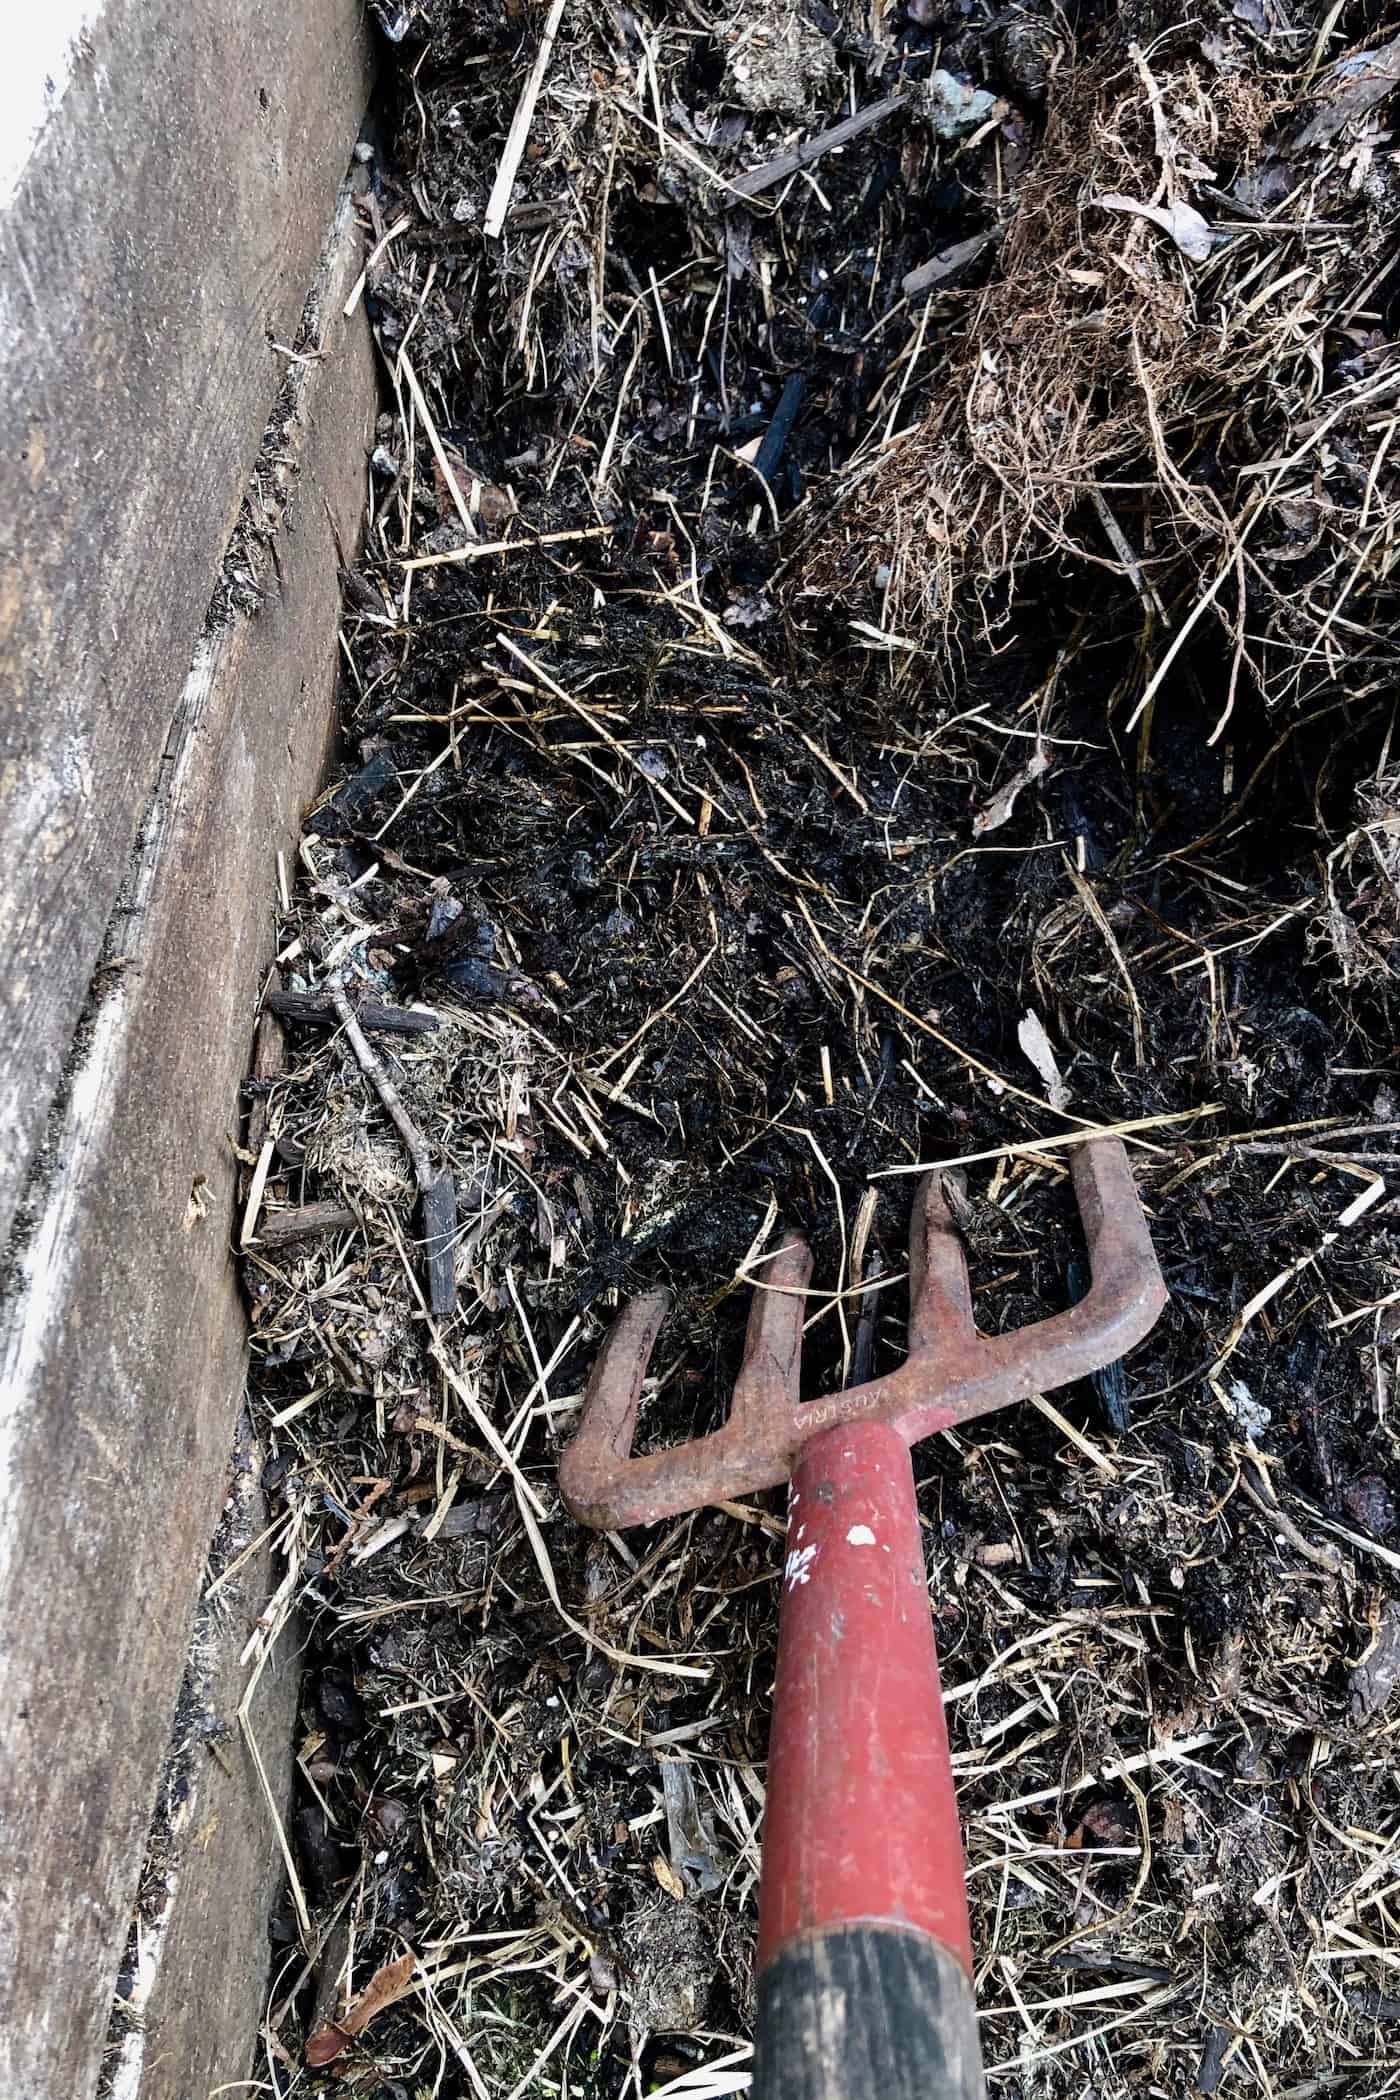 Pitchfork turning compost heap